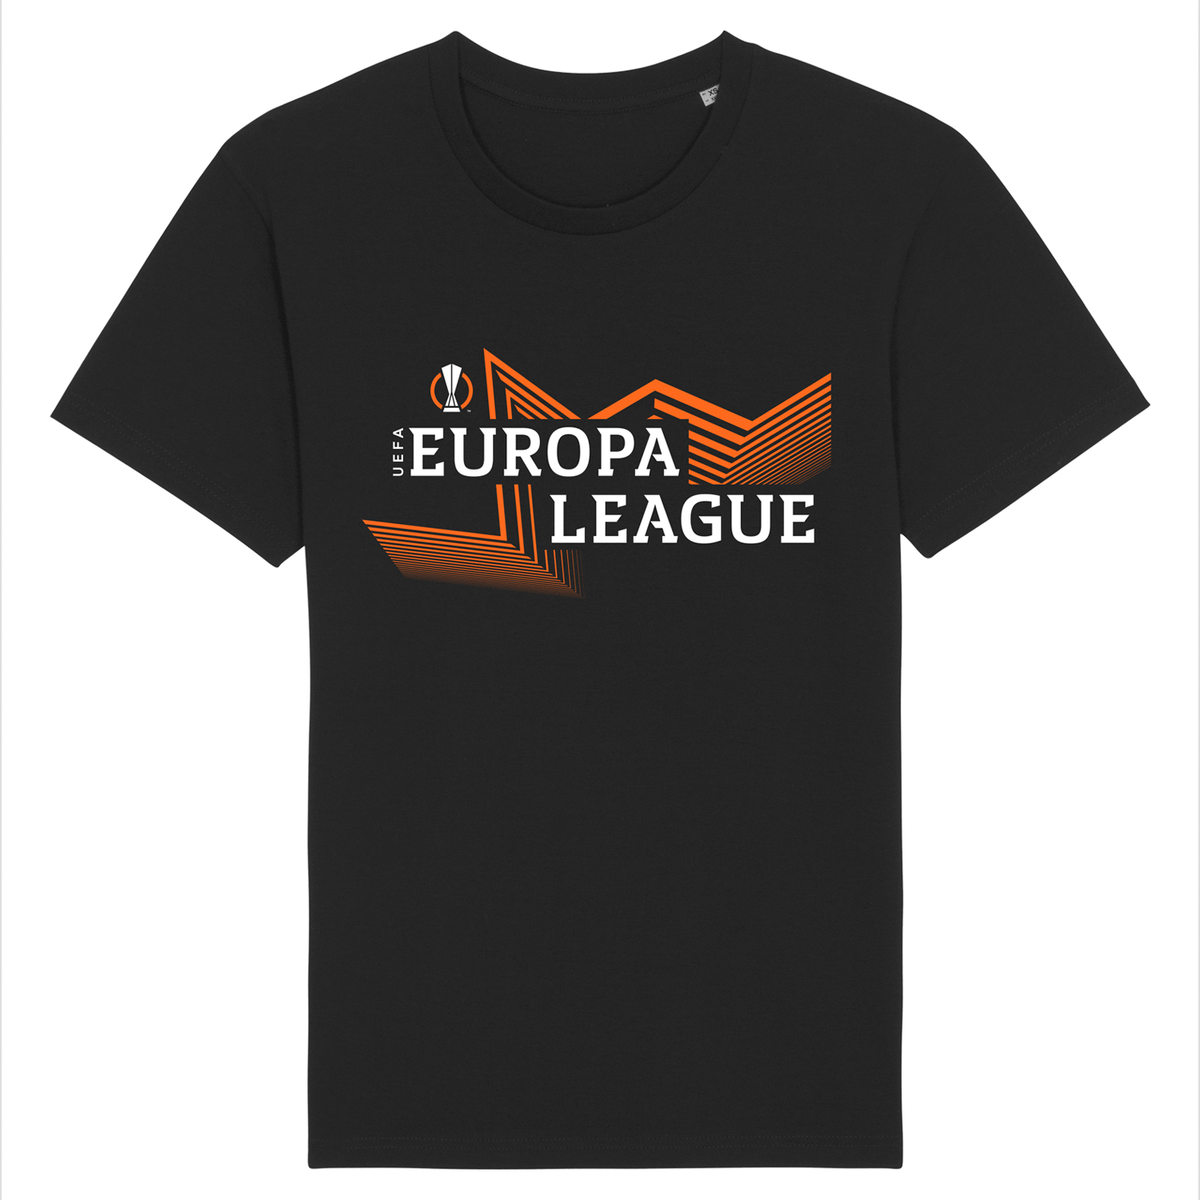 UEFA Europa League - Euro Energy Wave Black T-Shirt UEFA Club Competitions Online Store